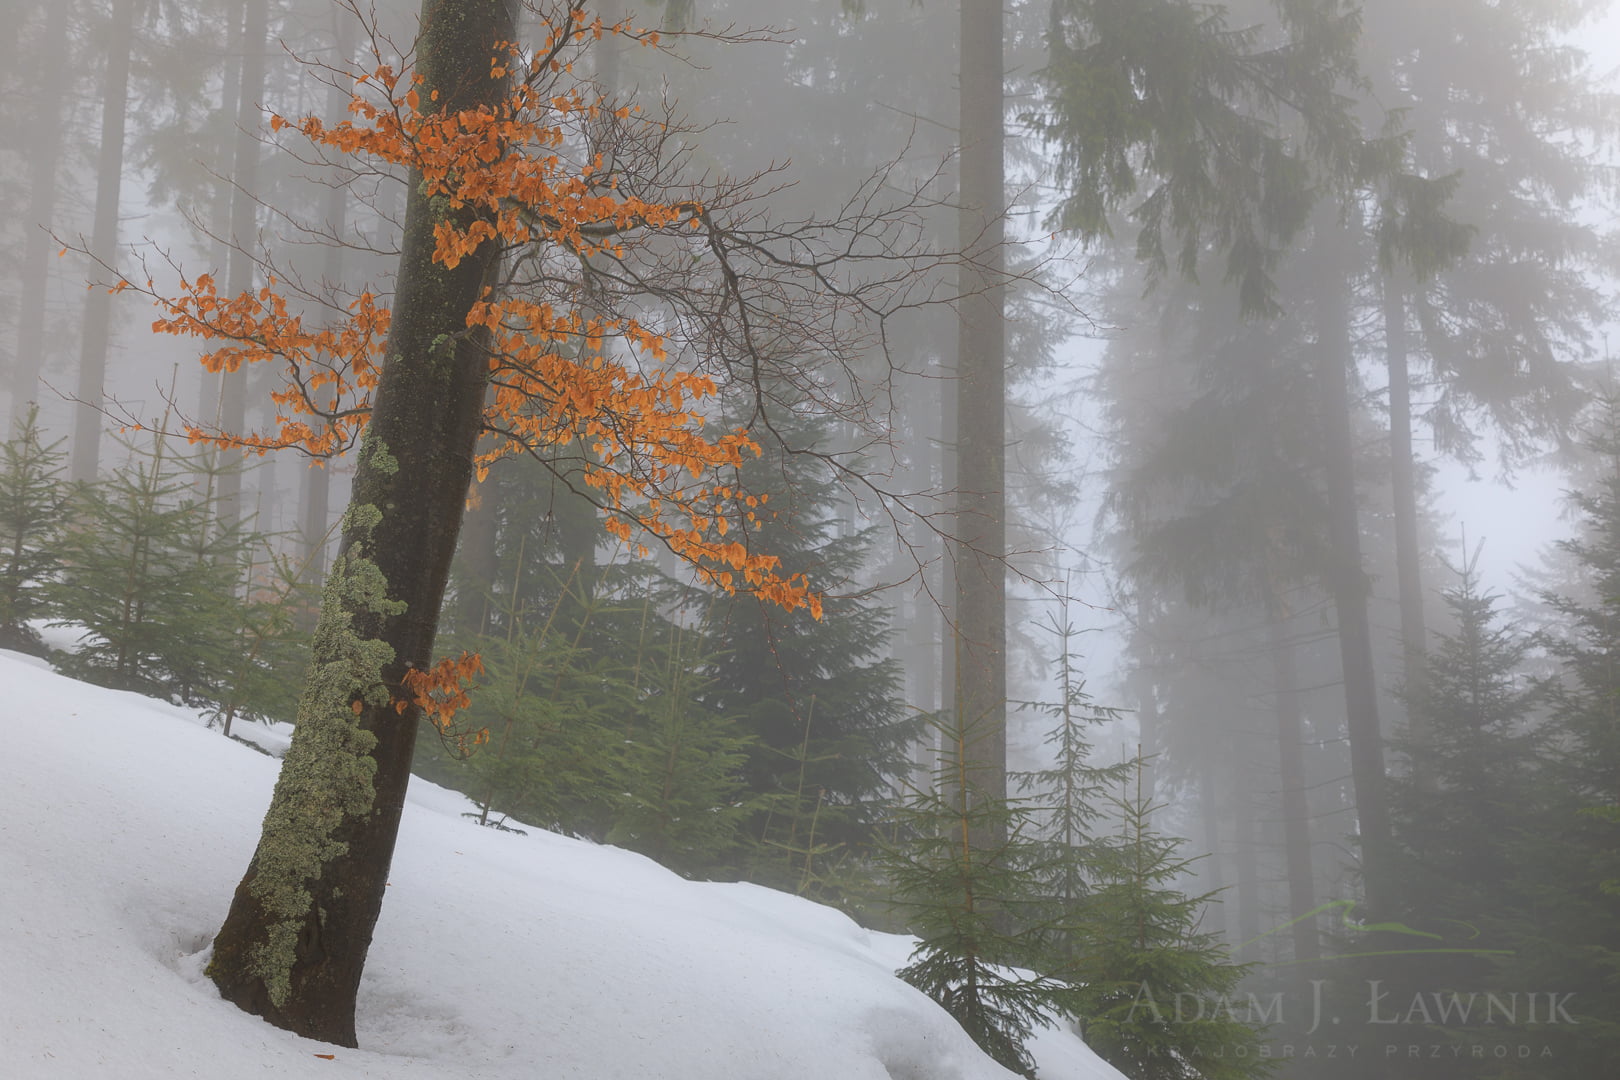 Zimowy las we mgle